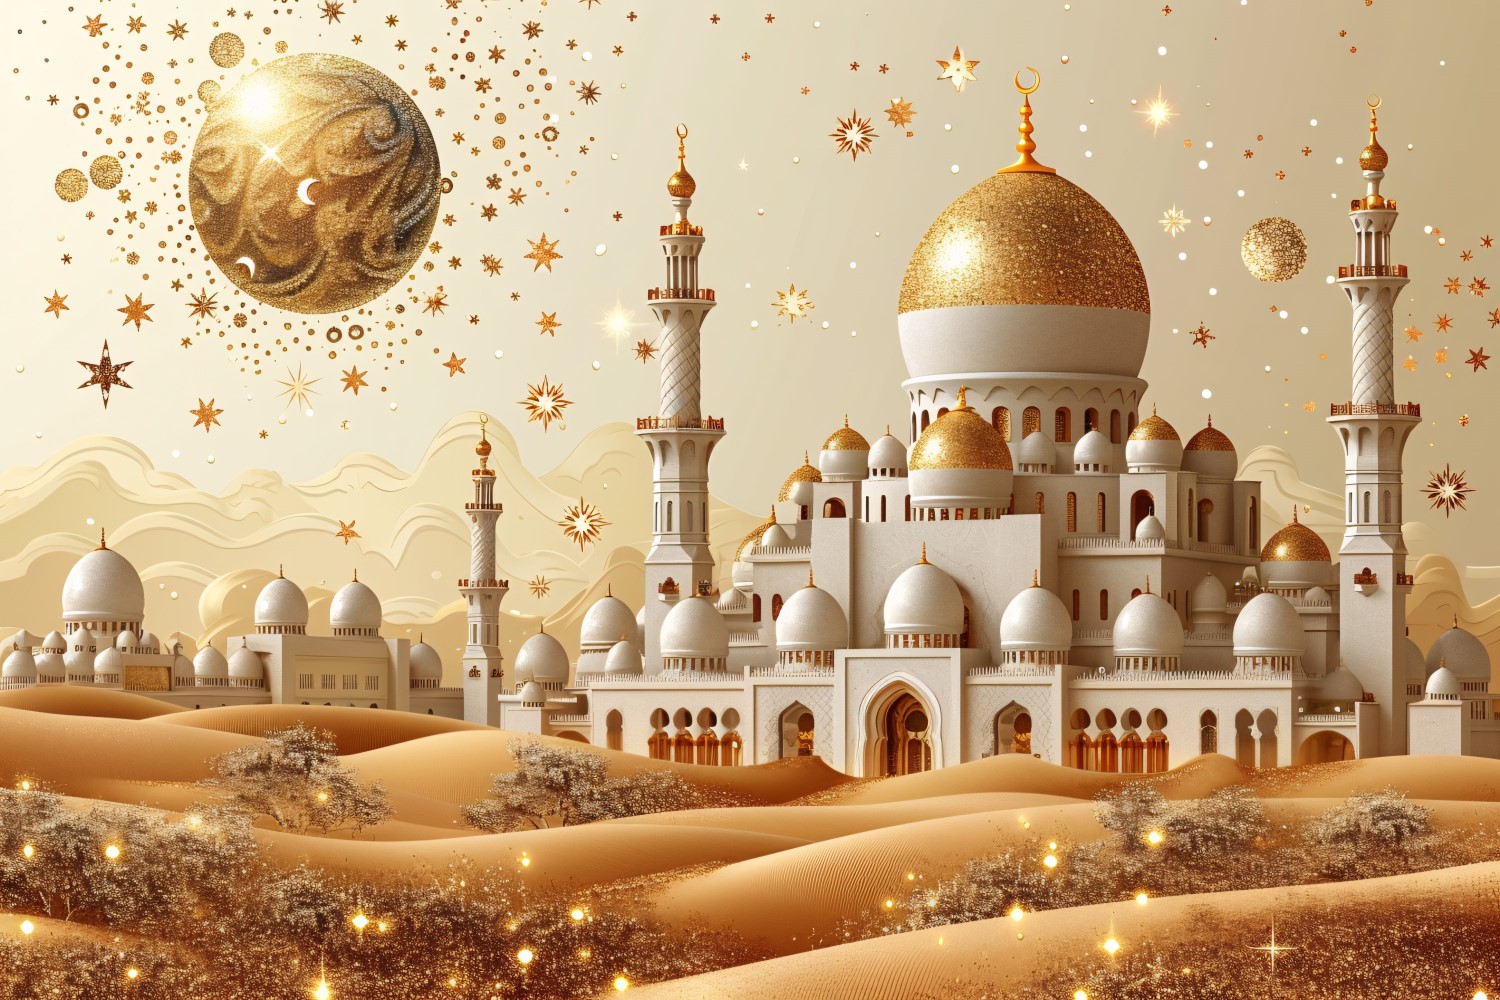 Ramadan Kareem greeting card design with Golden mosque in the desert